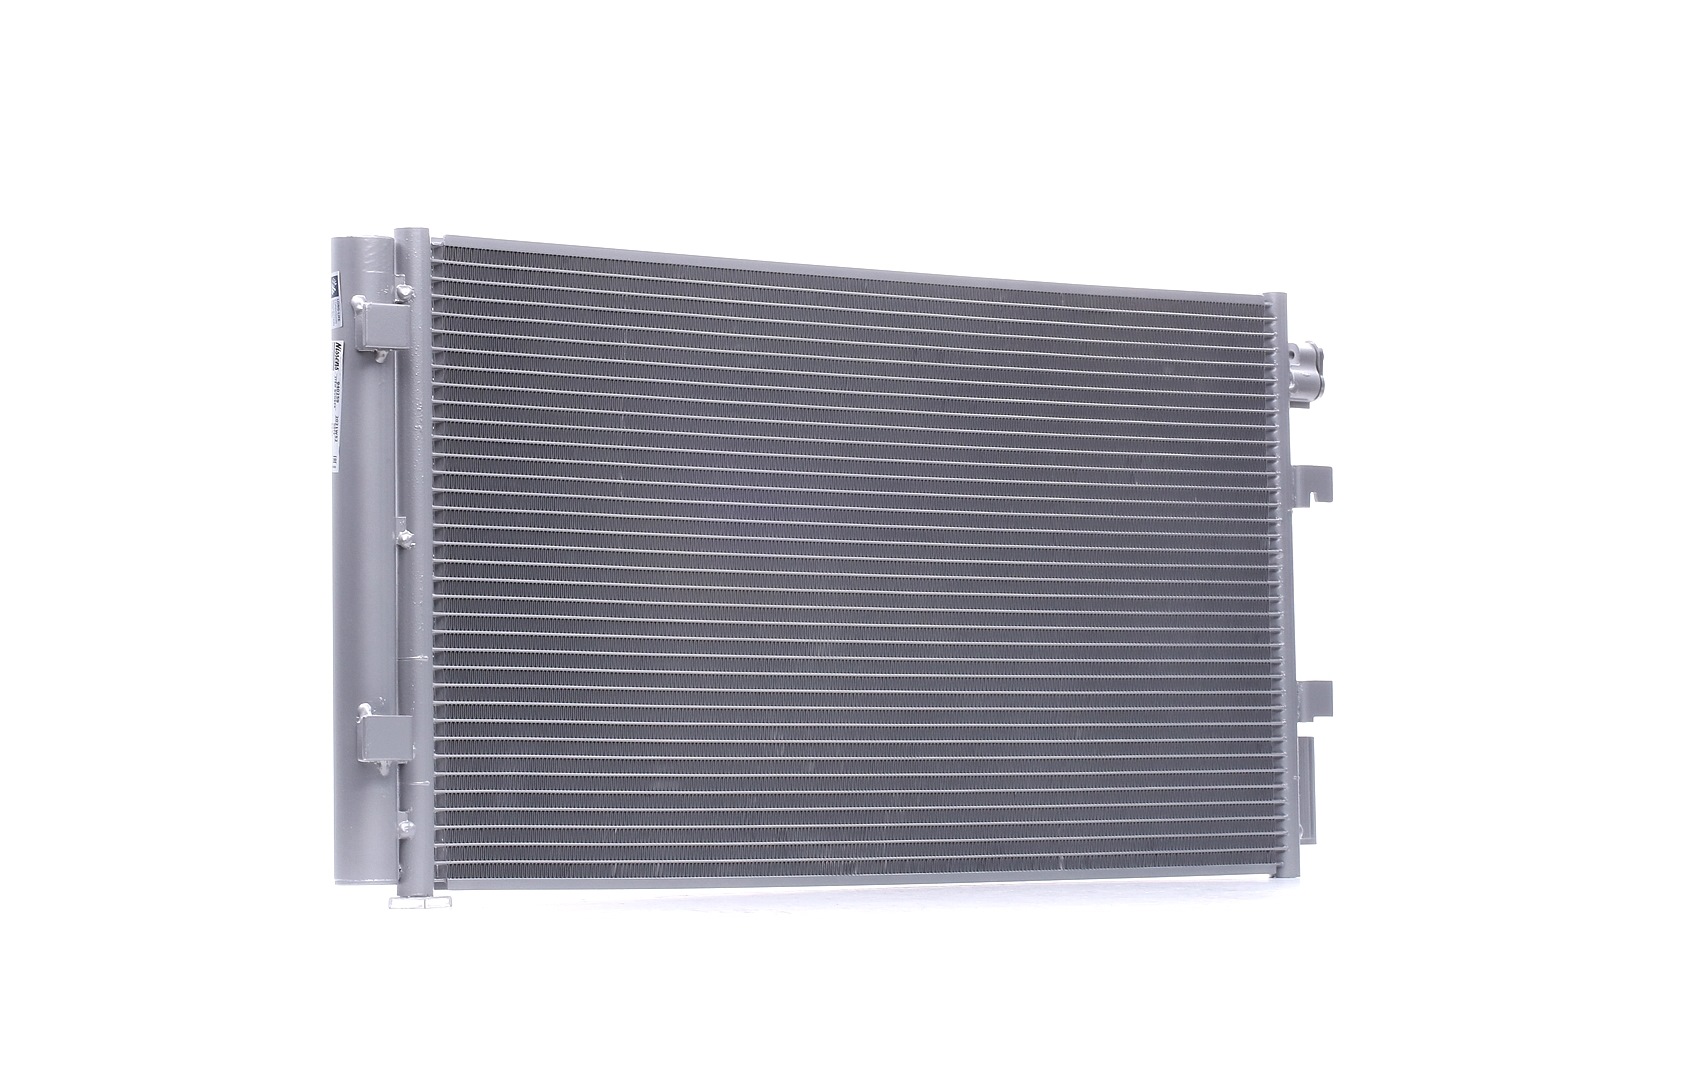 NISSENS 940259 Air conditioning condenser with dryer, Aluminium, 685mm, R 134a, R 1234yf